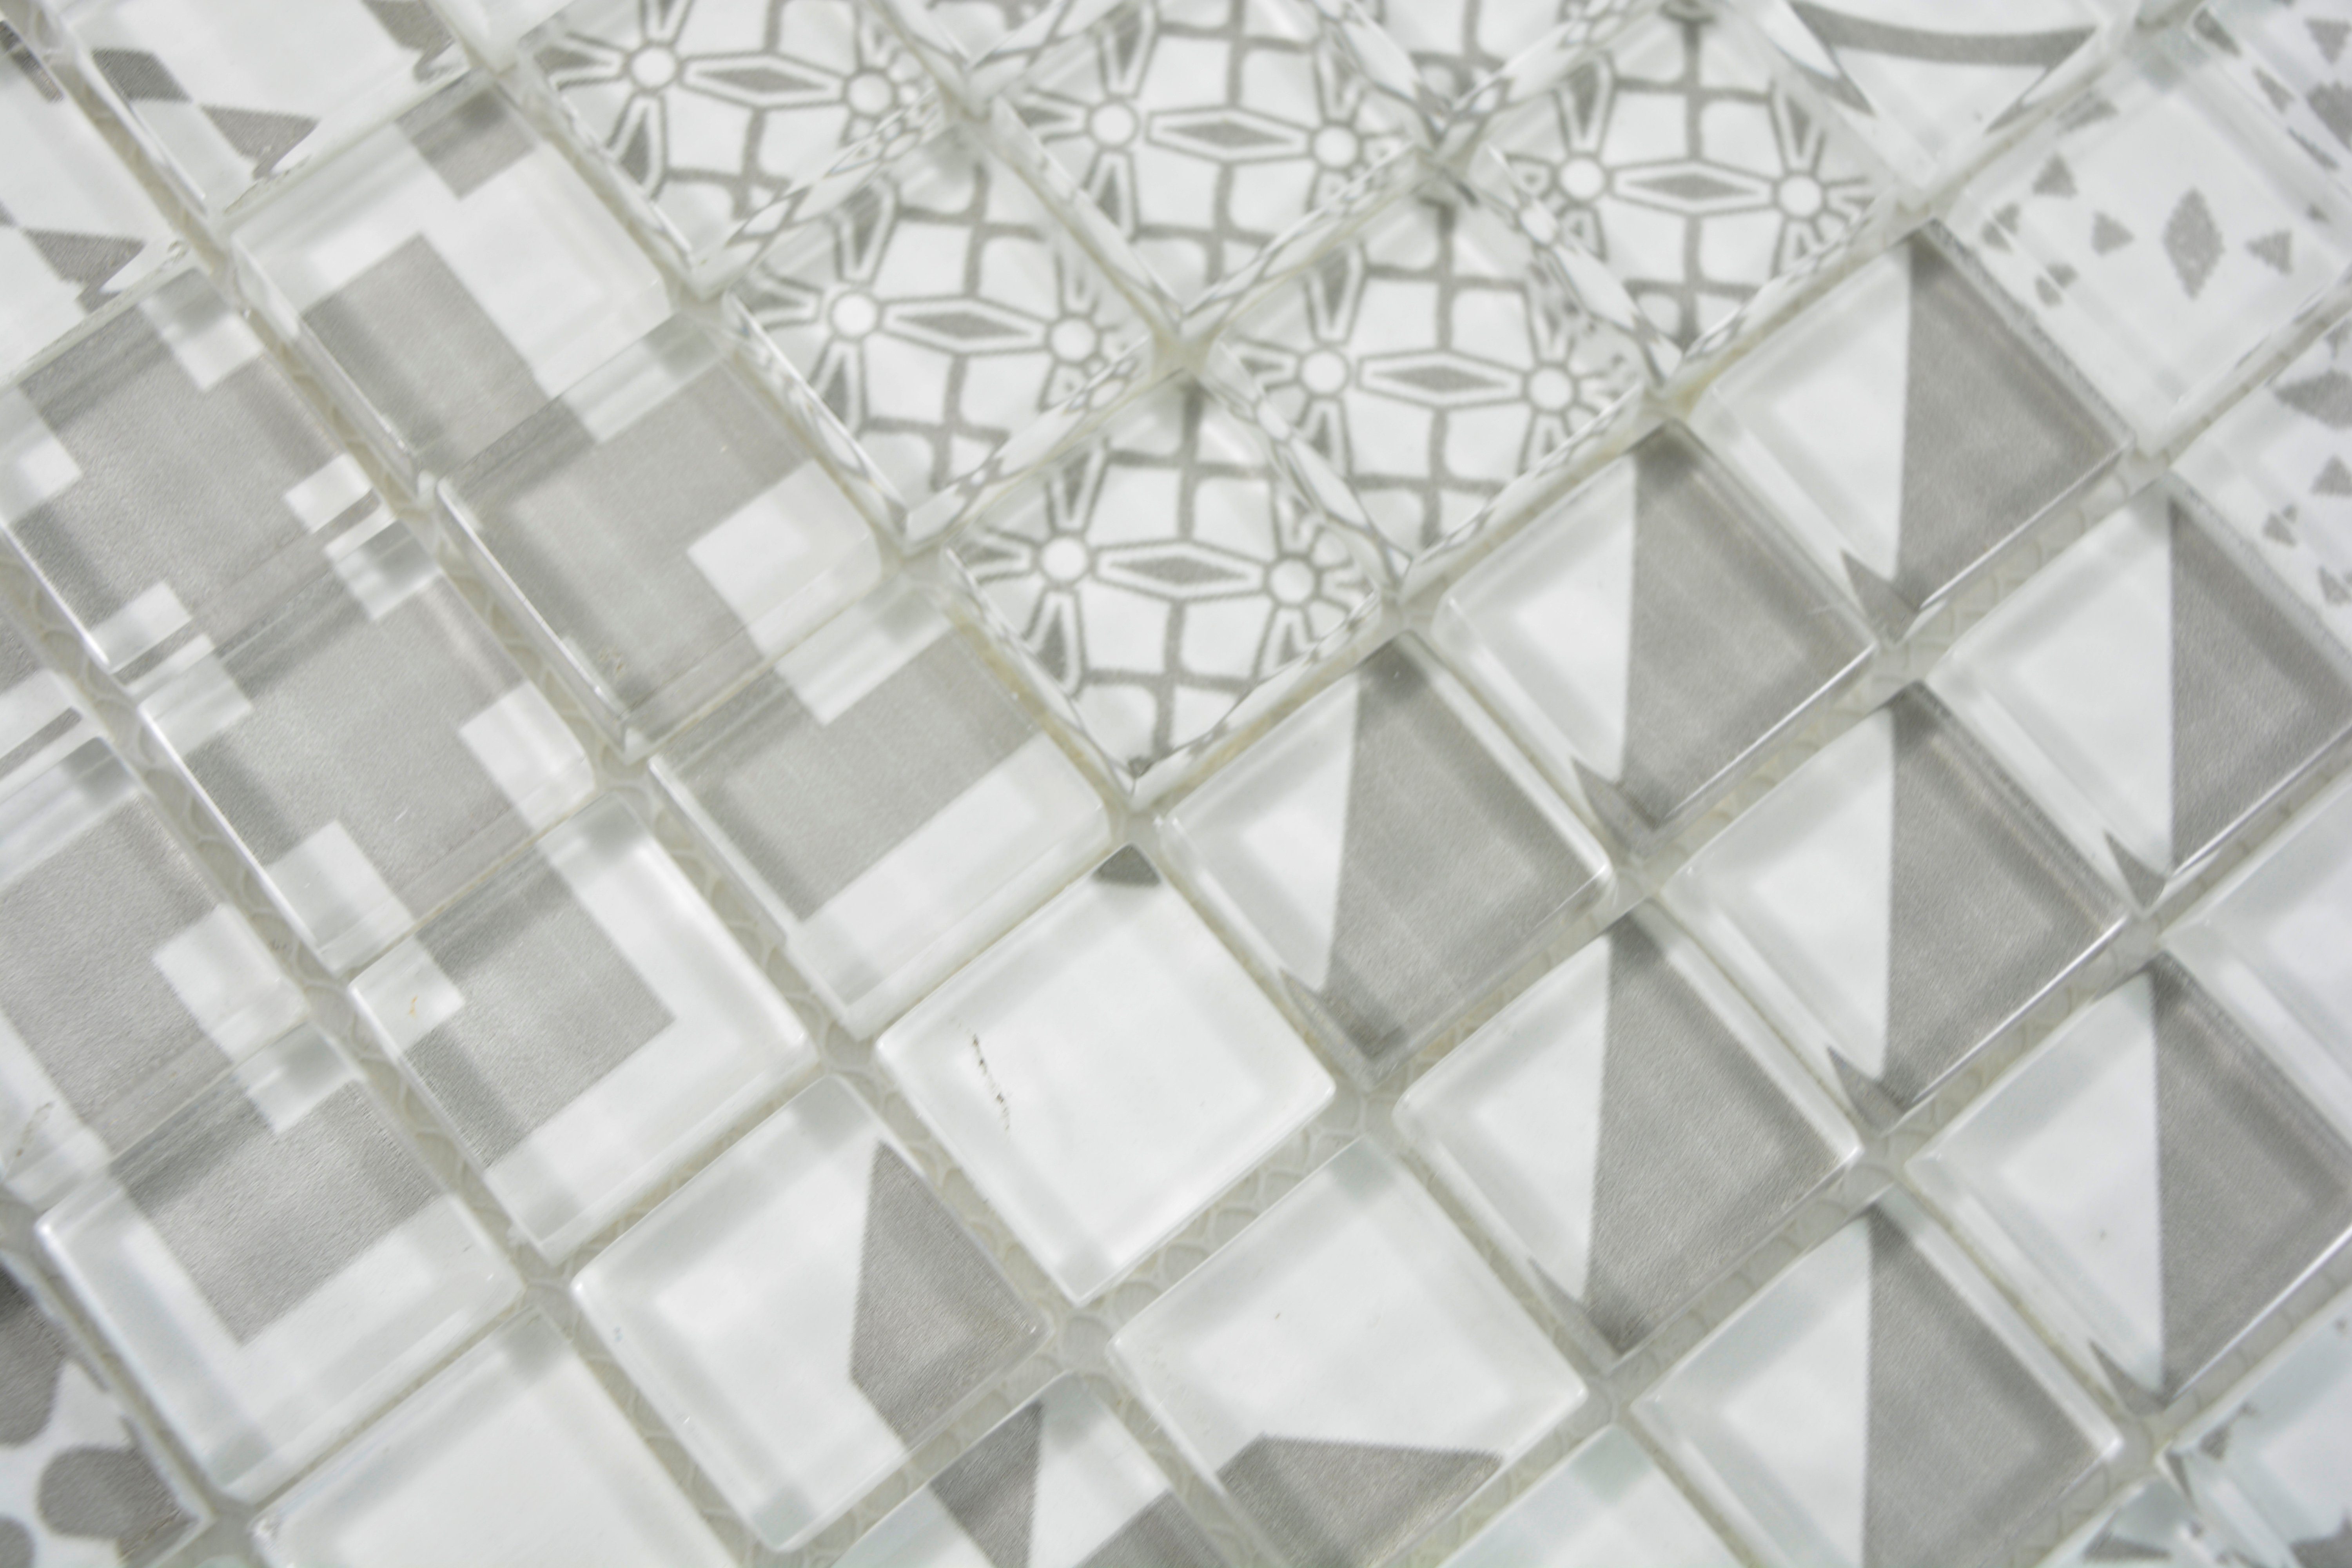 Mosani Mosaikfliesen Crystal grau Matten Mosaikfliesen / Glasmosaik 10 glänzend